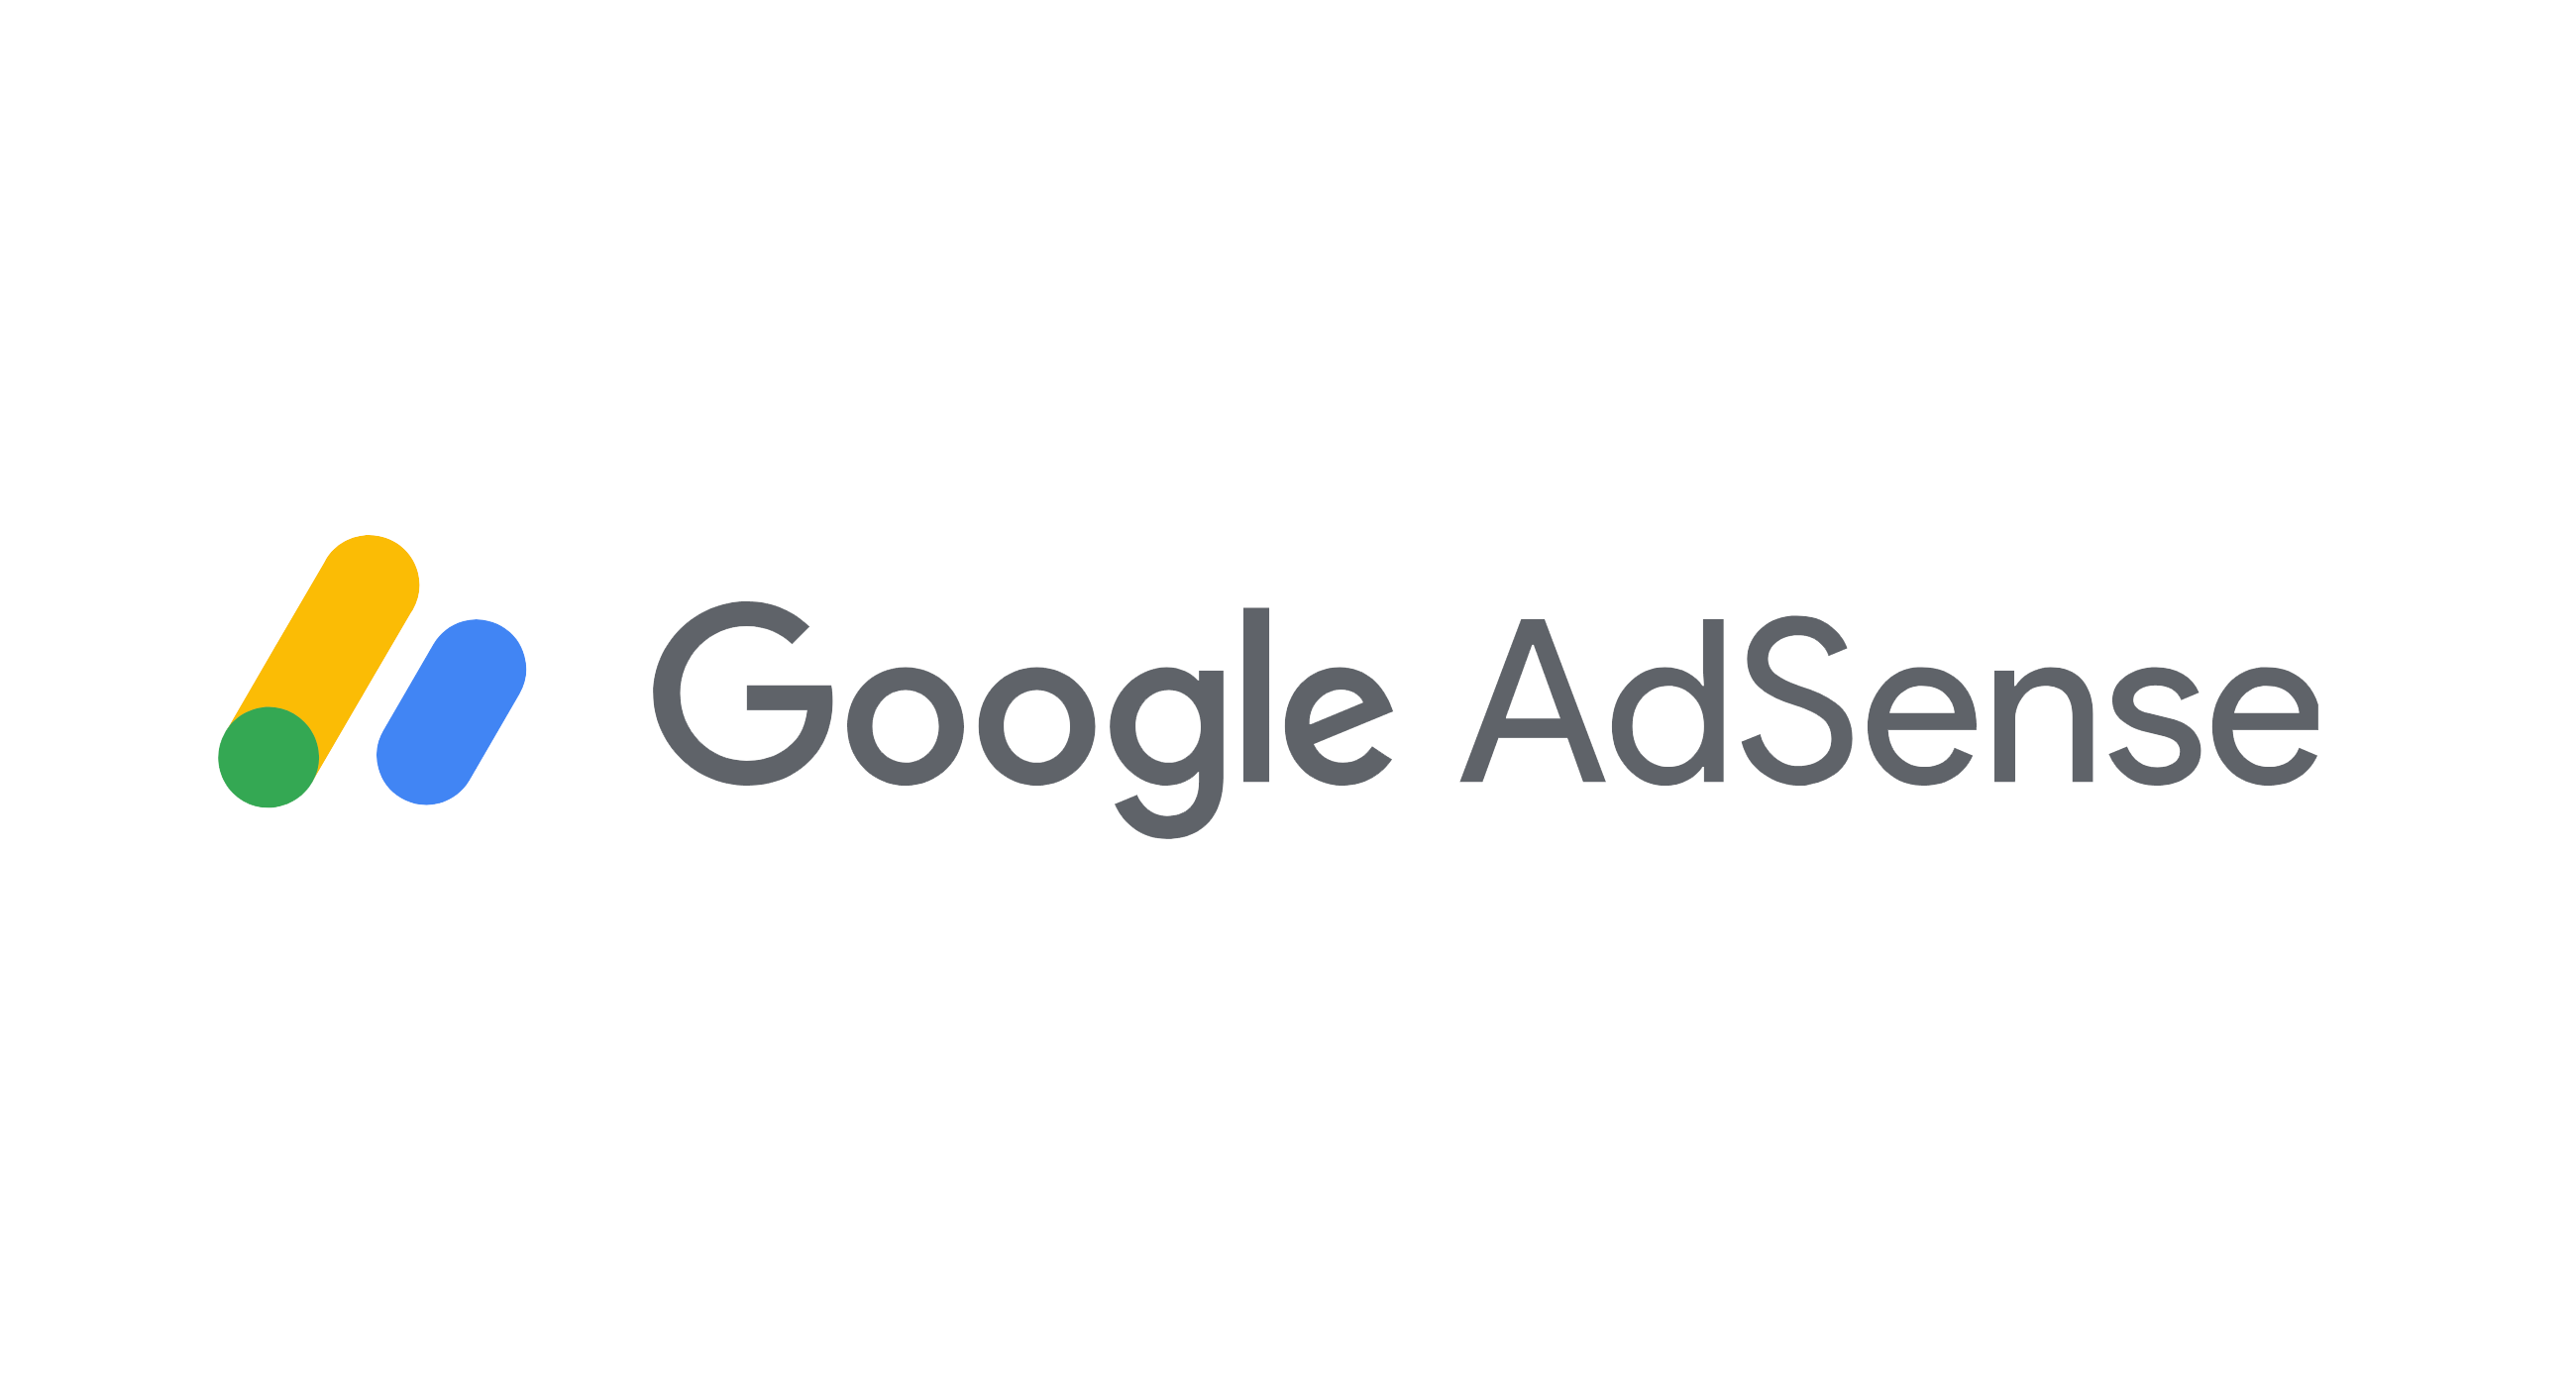 Google Adsense sign up, sign up google adsence, google adsence payment